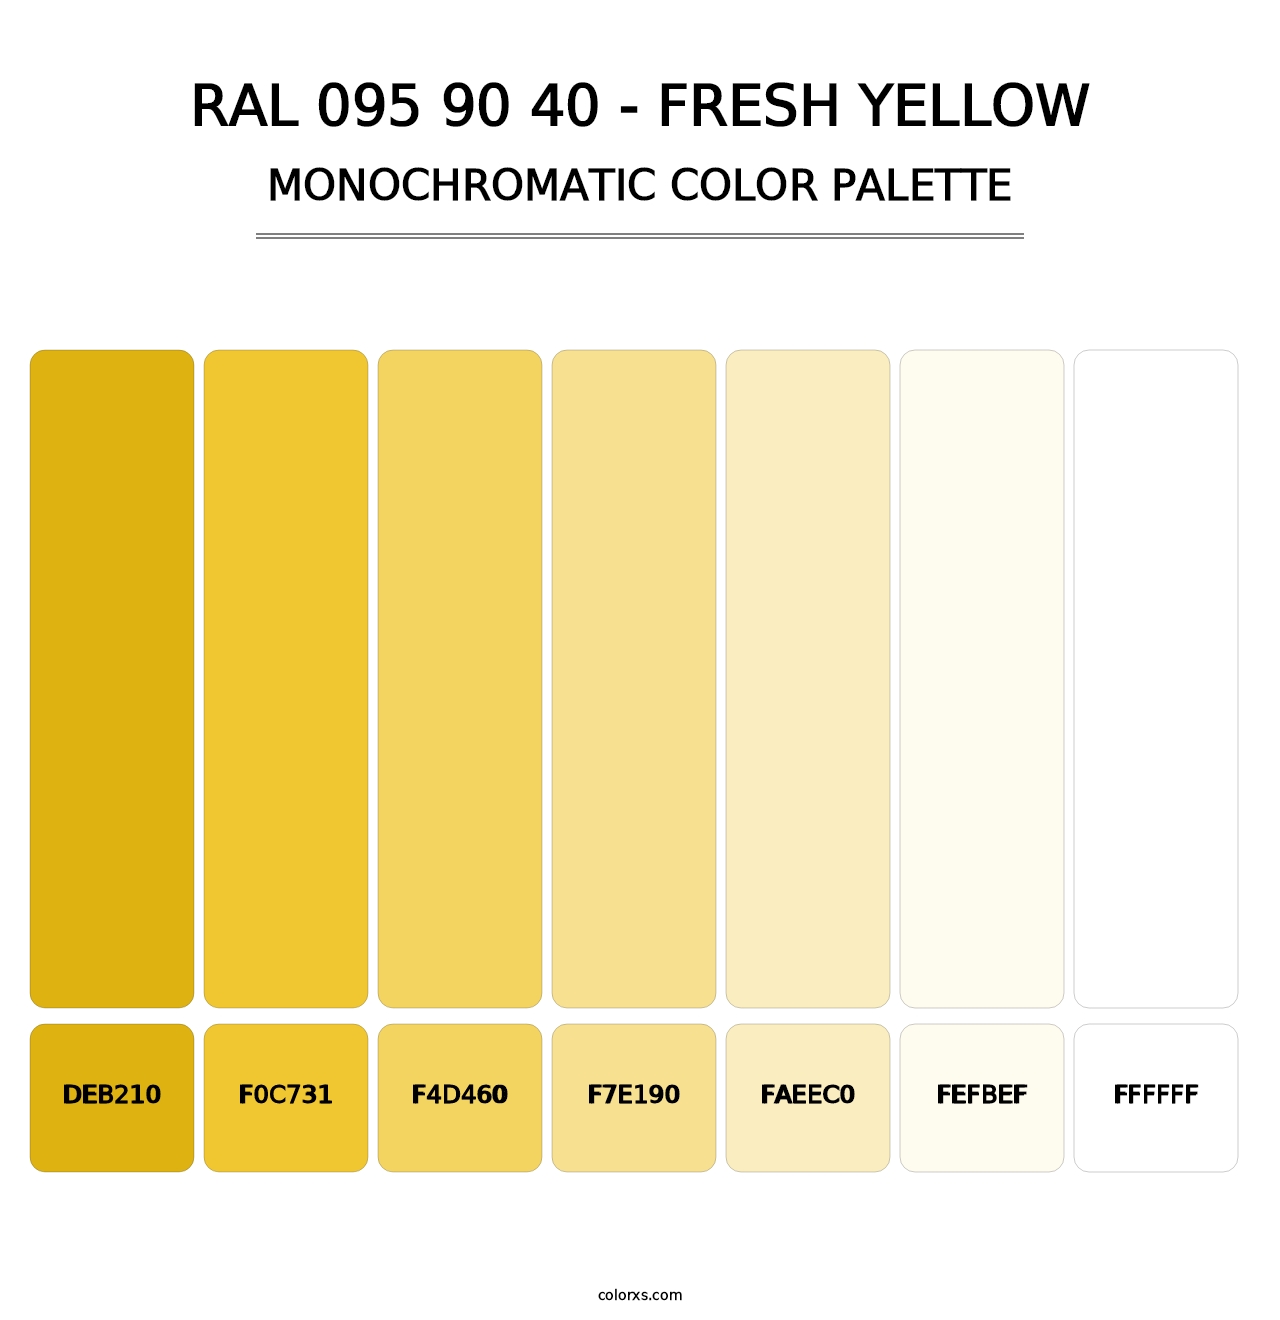 RAL 095 90 40 - Fresh Yellow - Monochromatic Color Palette